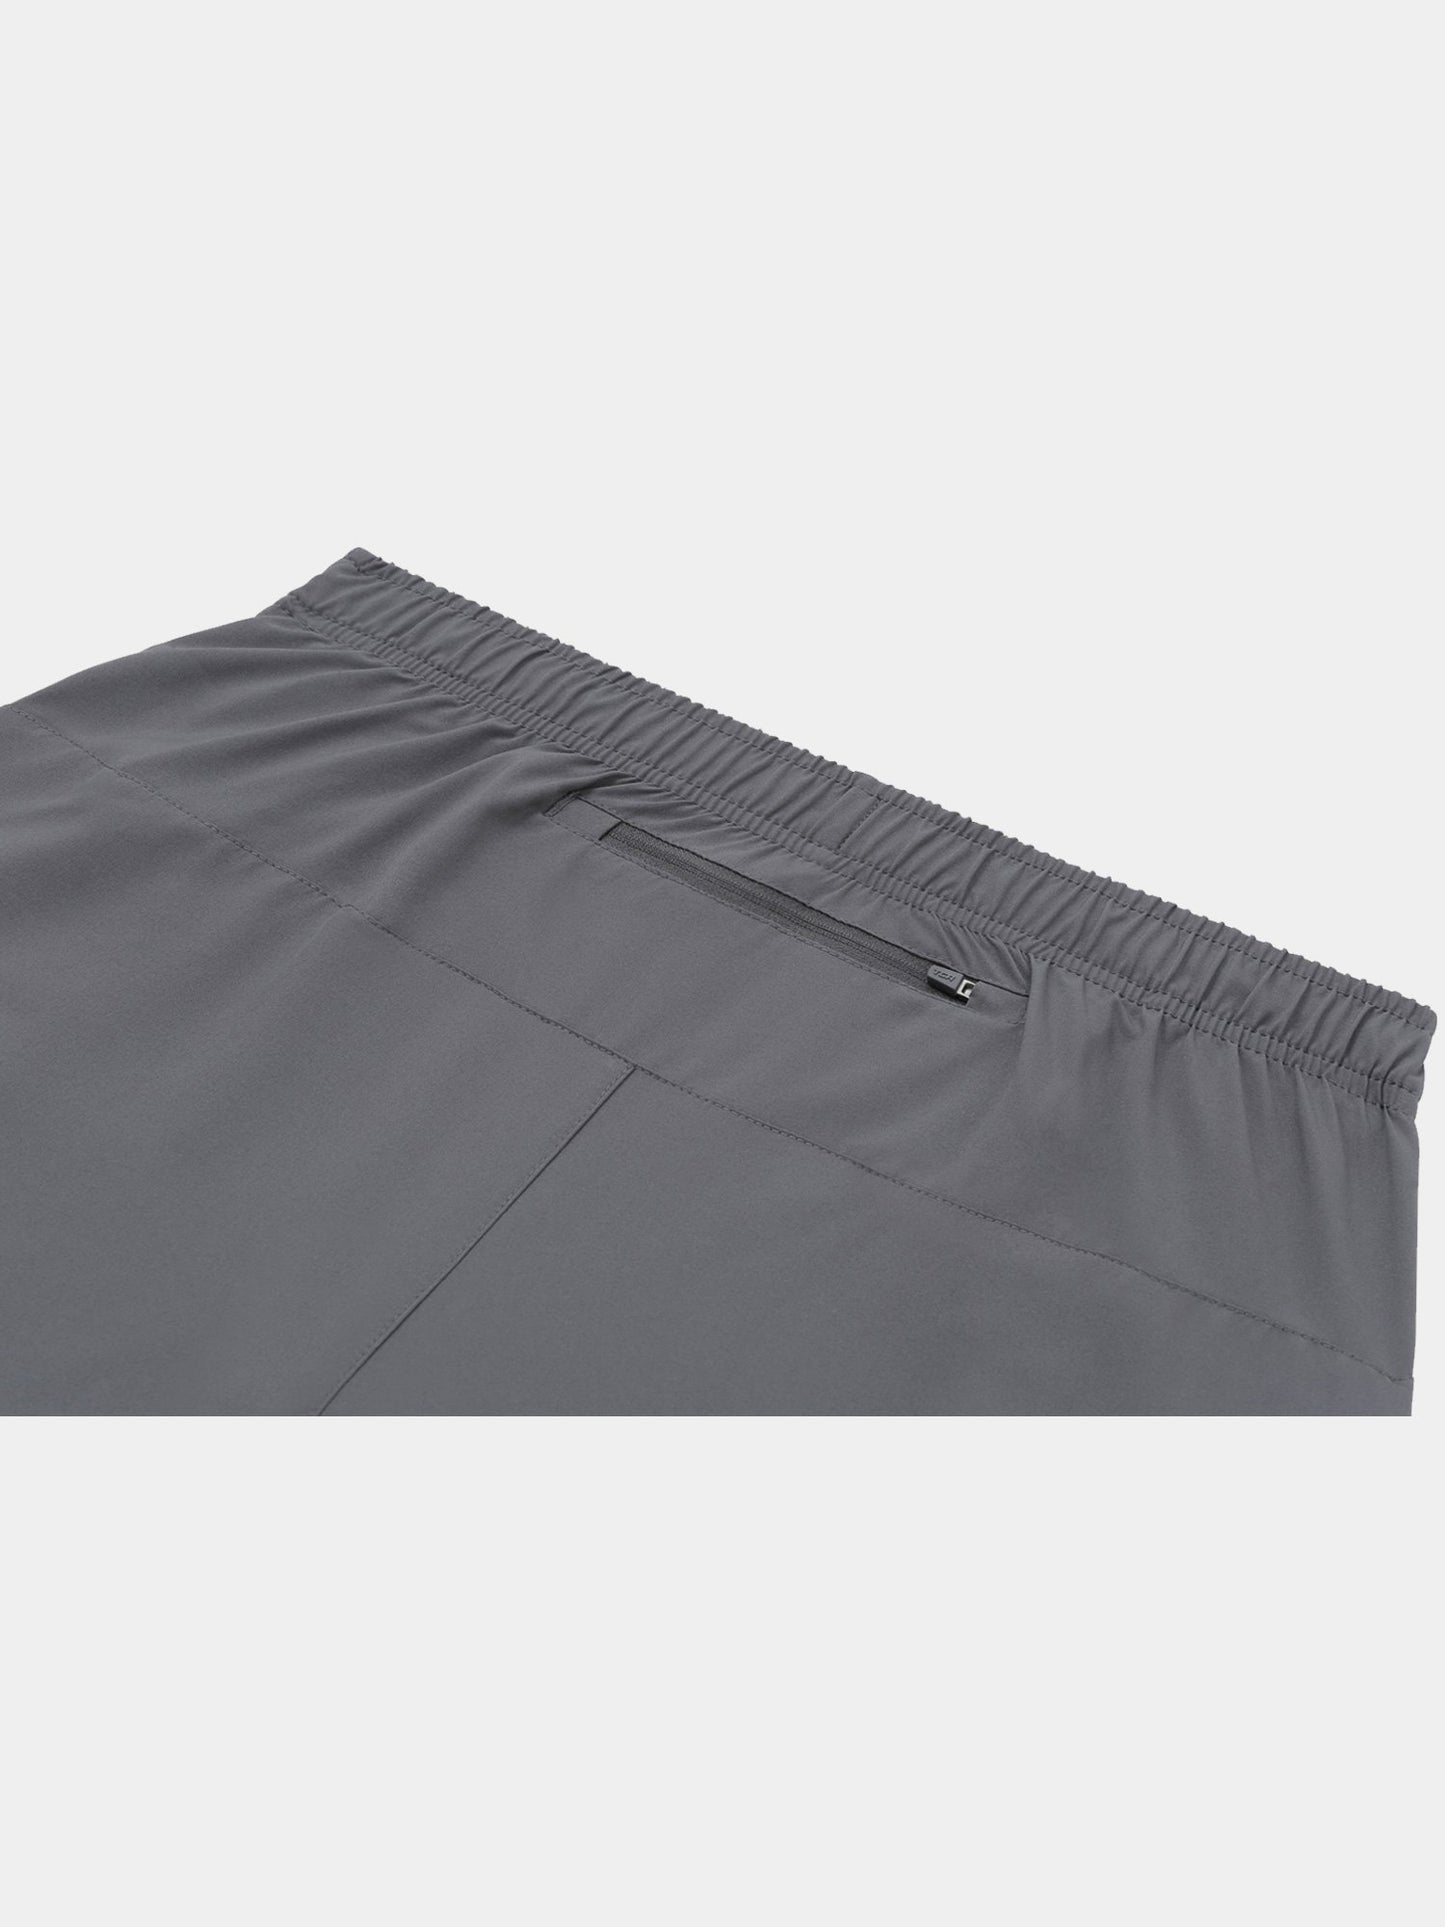 Ultra 2-in-1 Running Short For Men With Back Zip Pocket & Internal Compression Lining